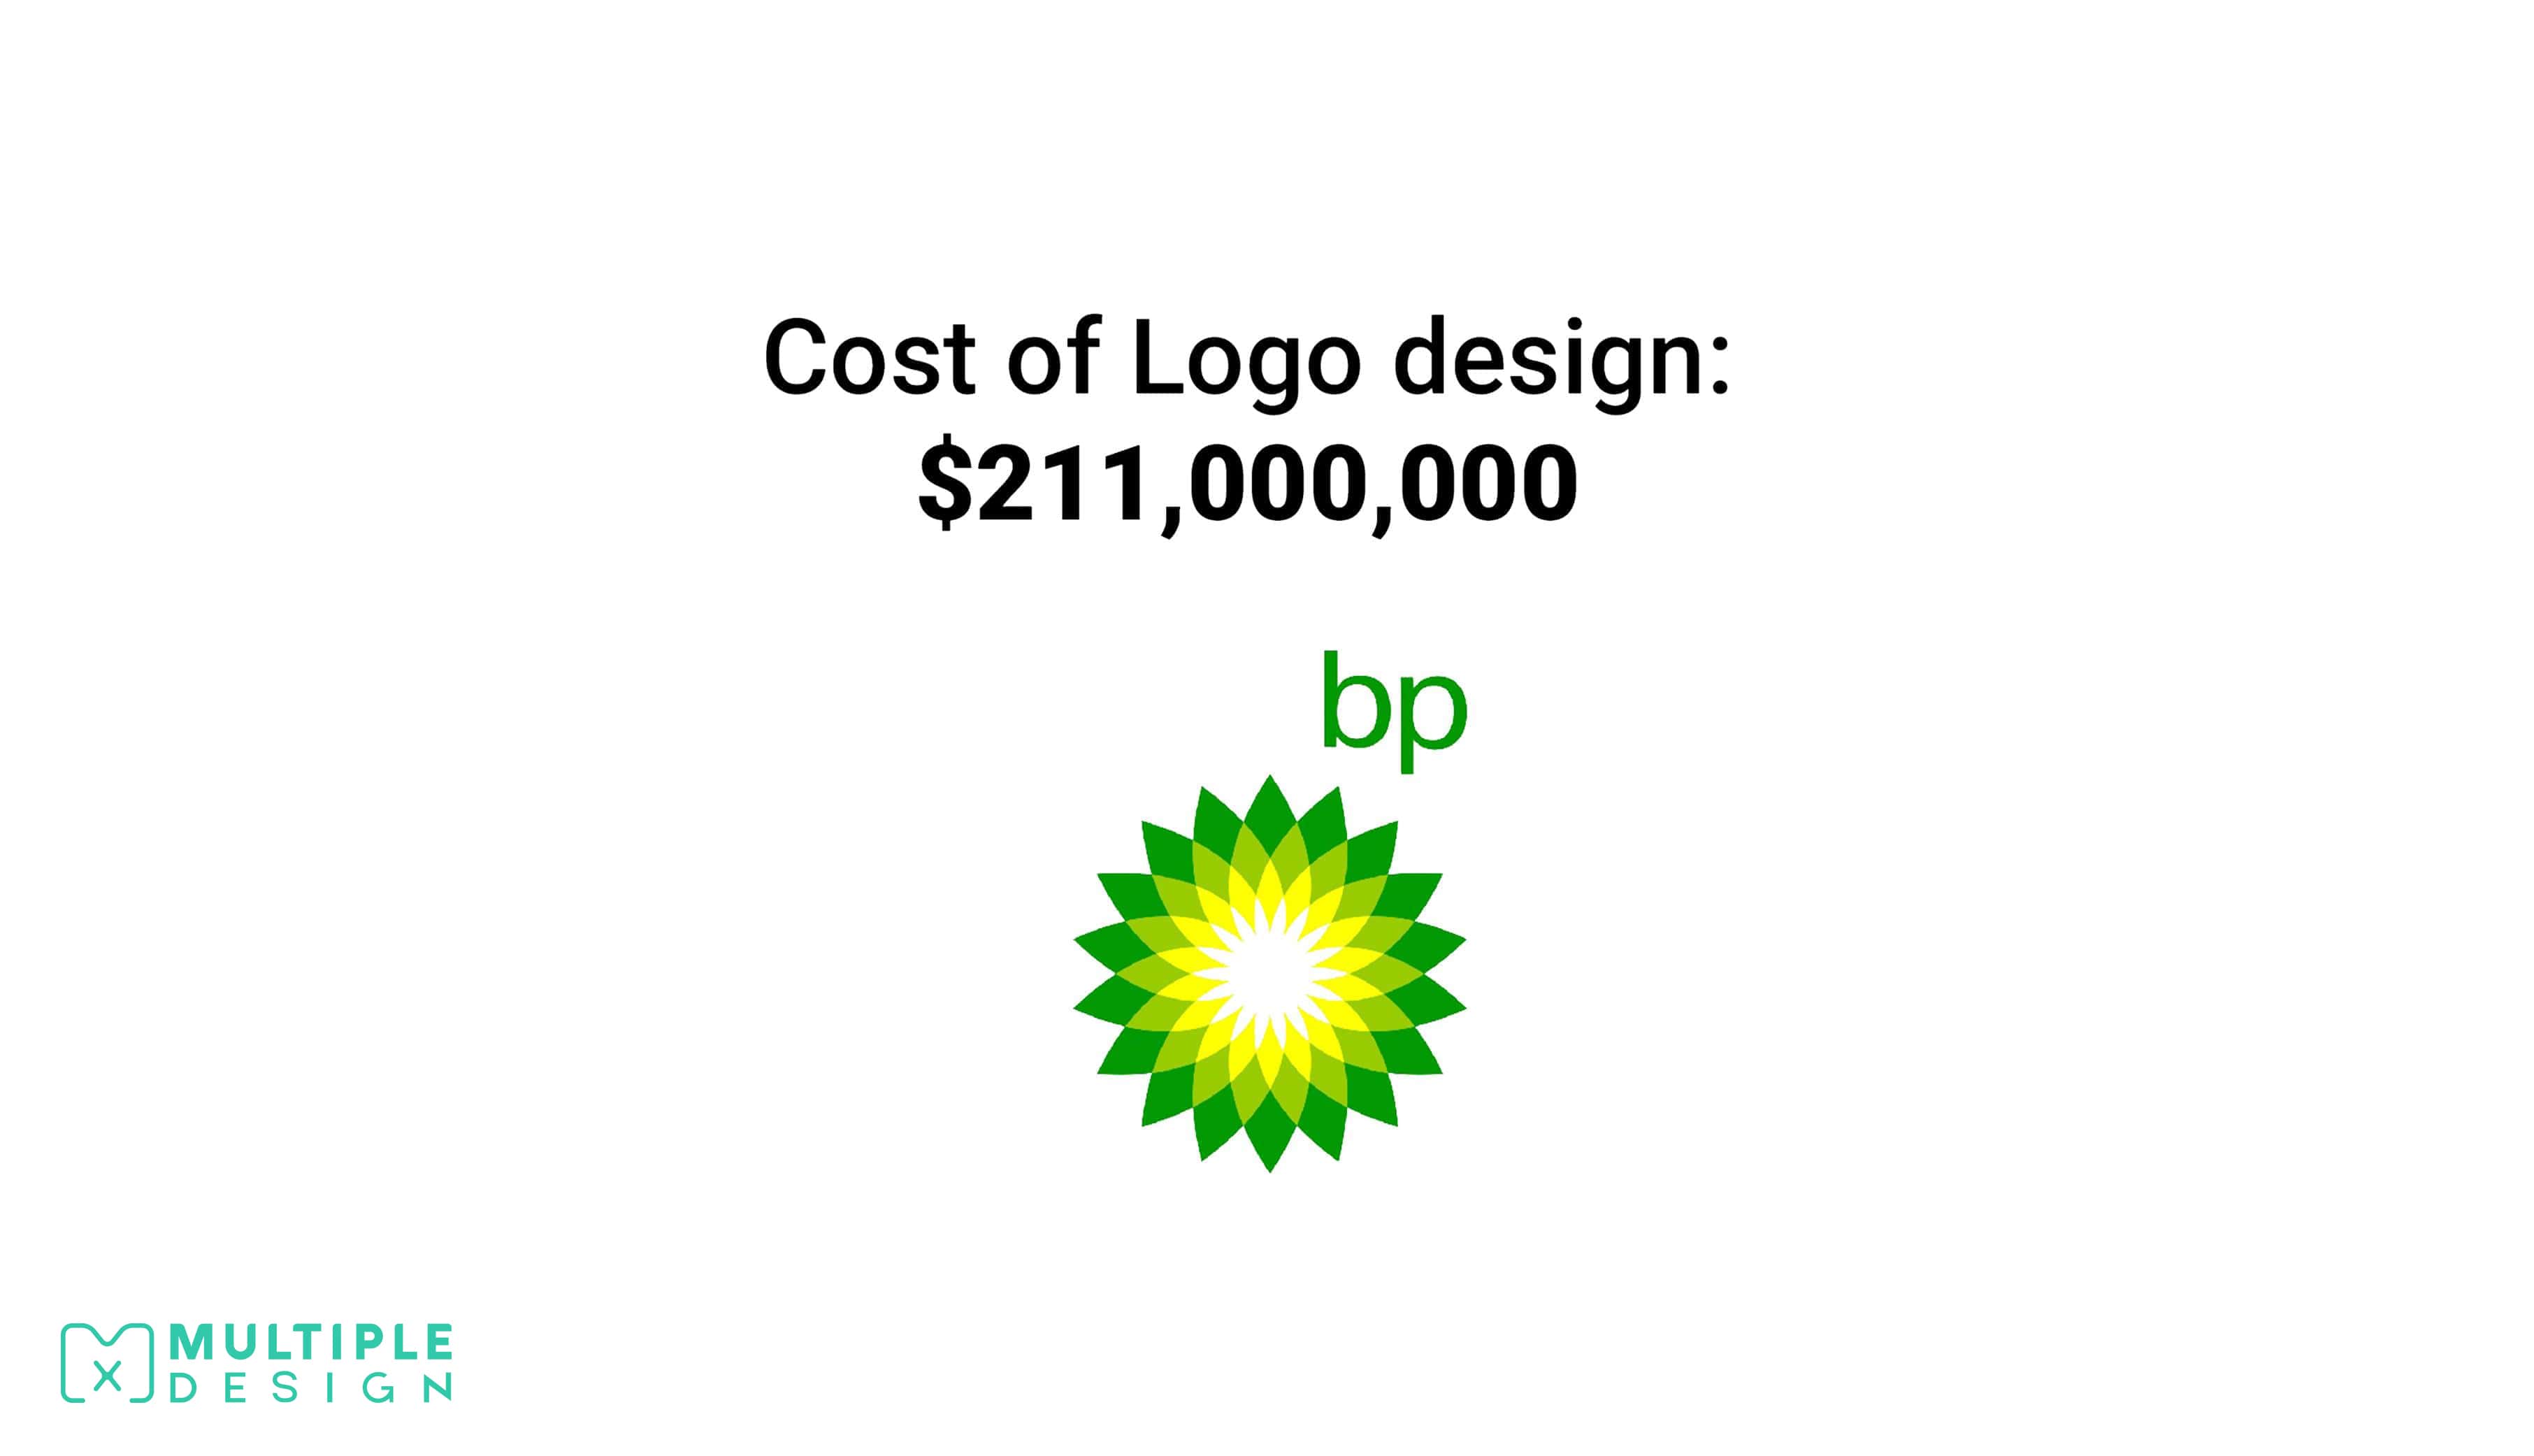 bp redesign $211,000,000 logo